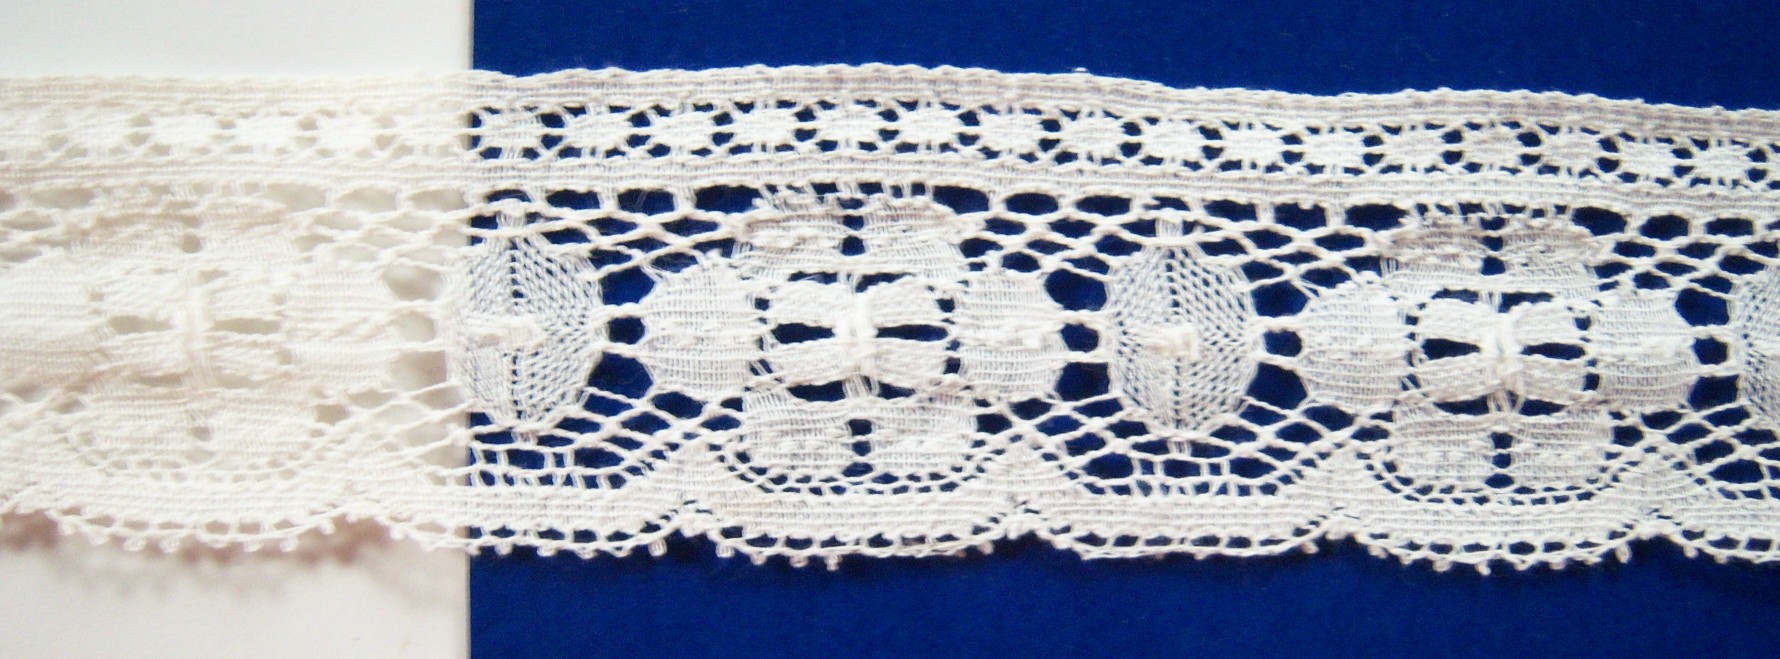 Ivory 2" Cotton Lace